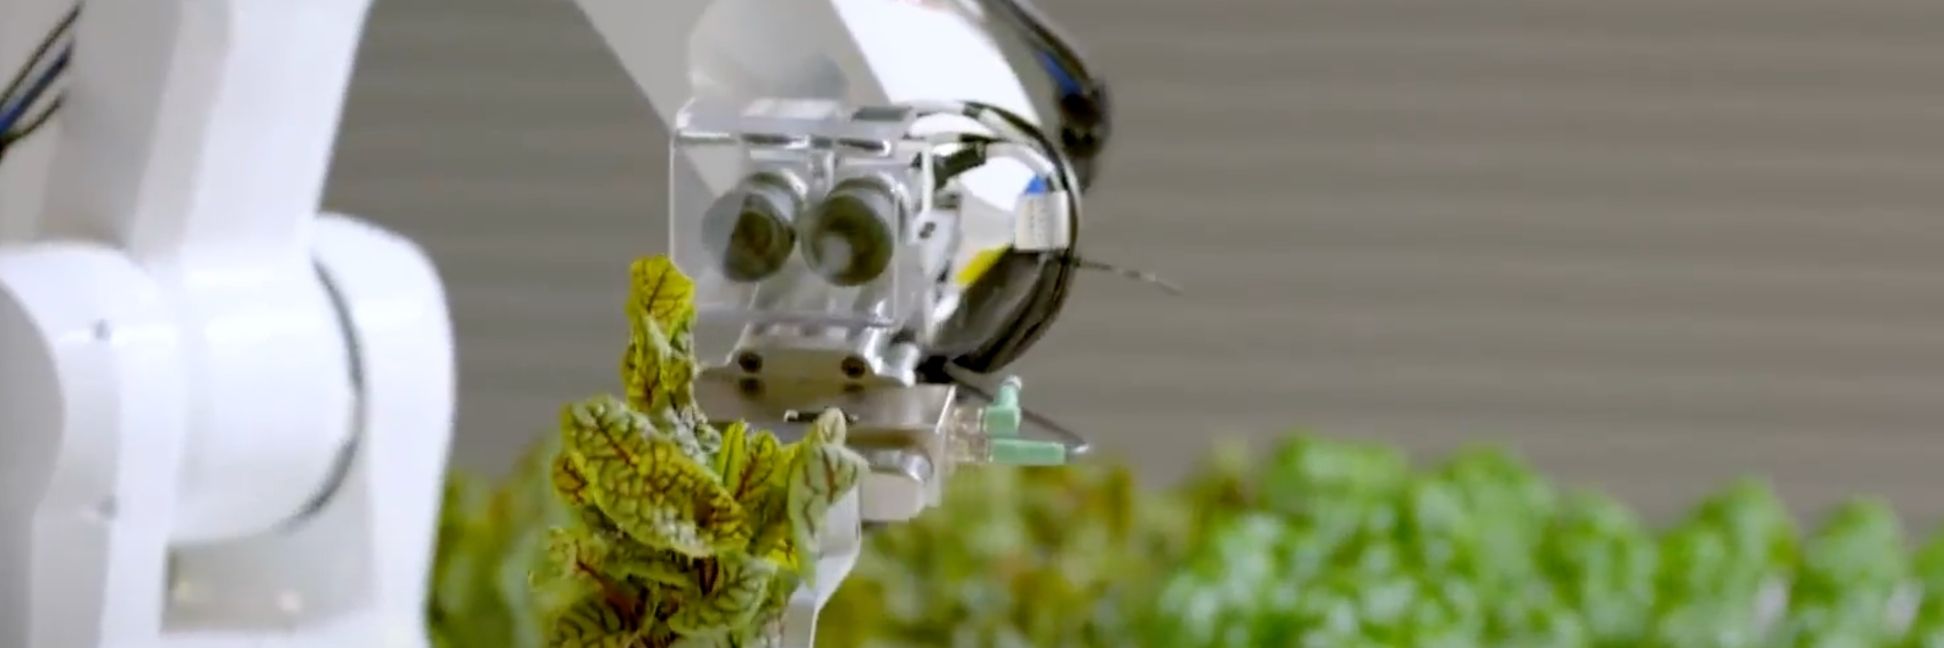 How Future Farming Technologies Help Us Live a Better Life